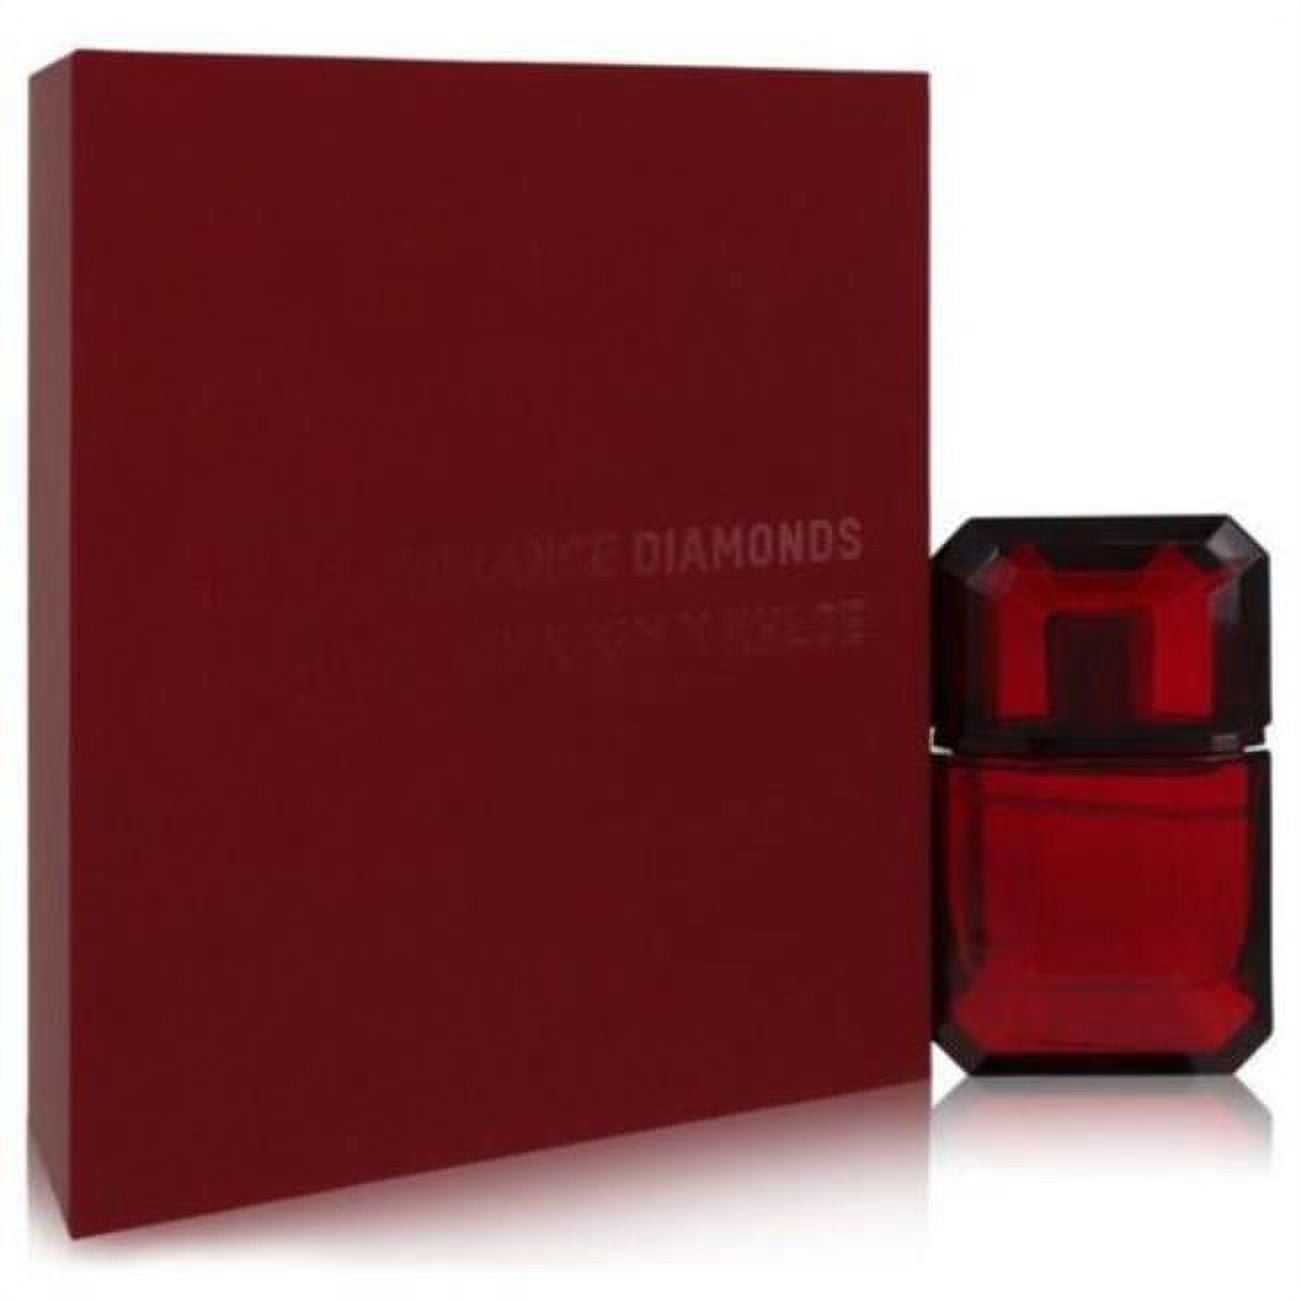 Kkw Fragrance Diamonds by Kkw Fragrance Eau De Parfum Spray 1 oz